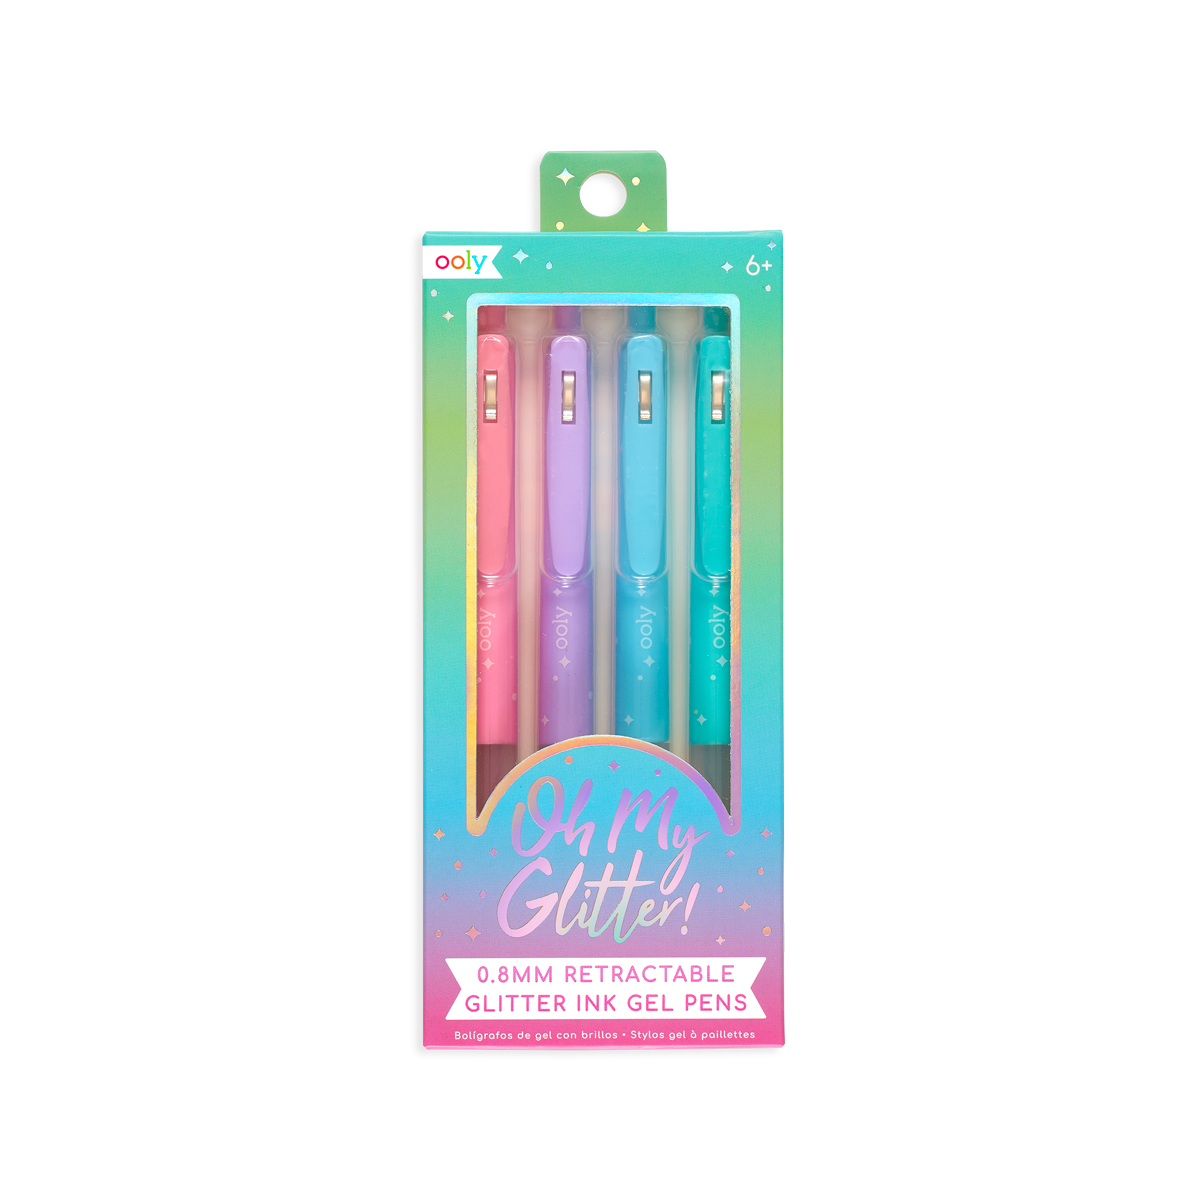 Ooly Rainbow Sparkle Glitter Marker Set of 15